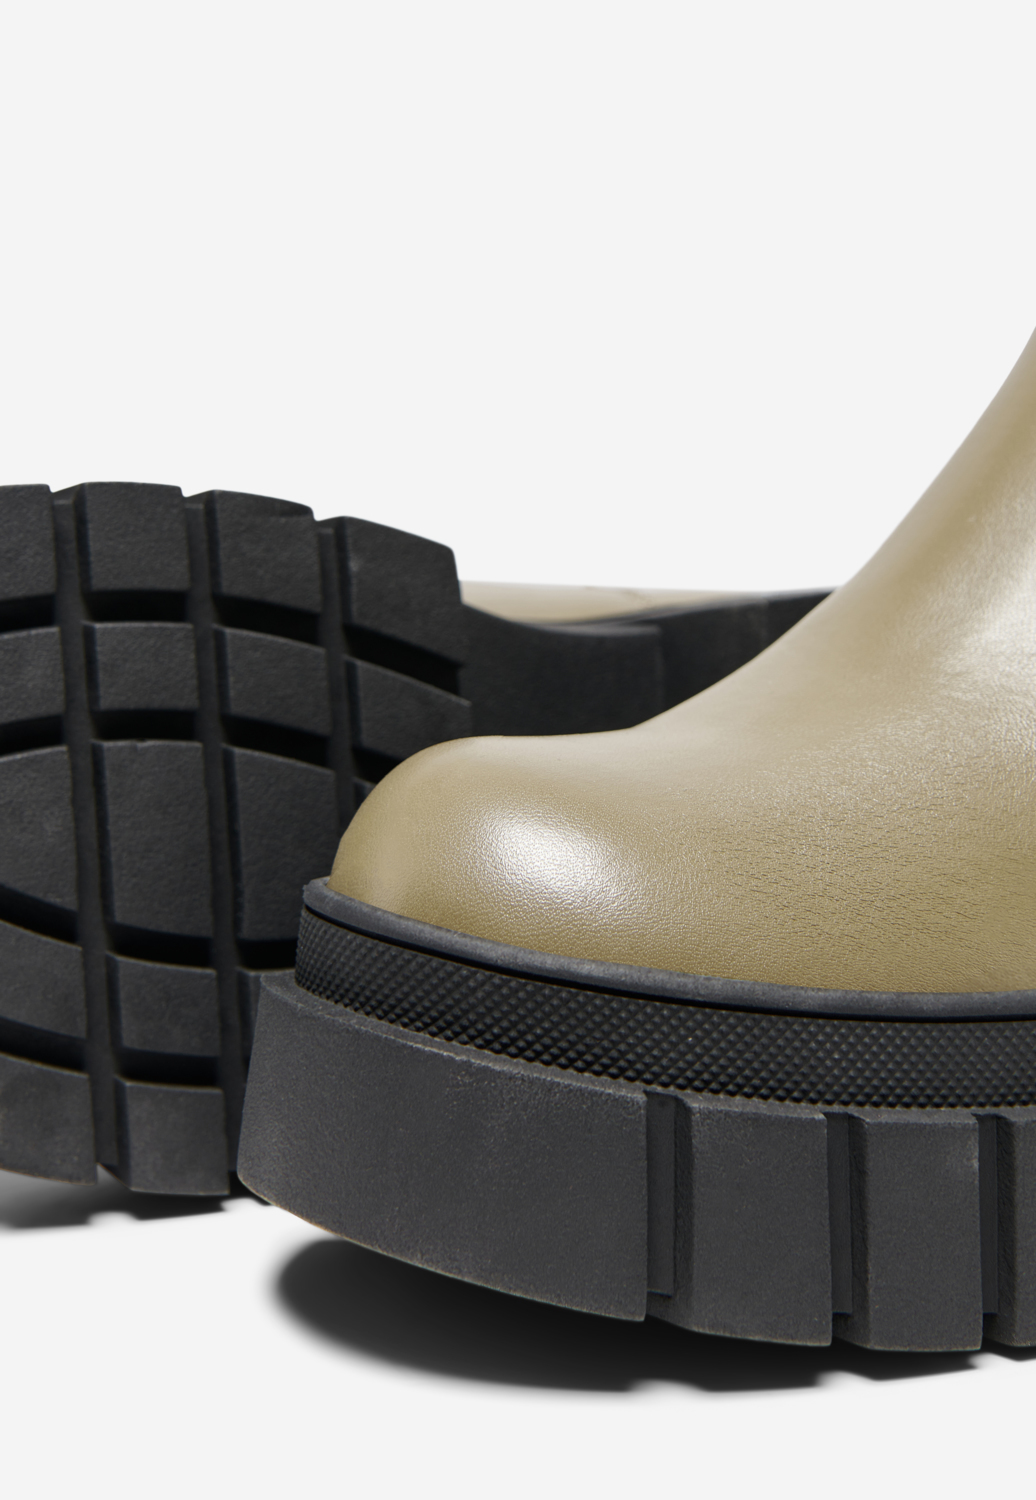 FINAL SALE- Baiza chunky-sole boots, GREEN OLIVE, large